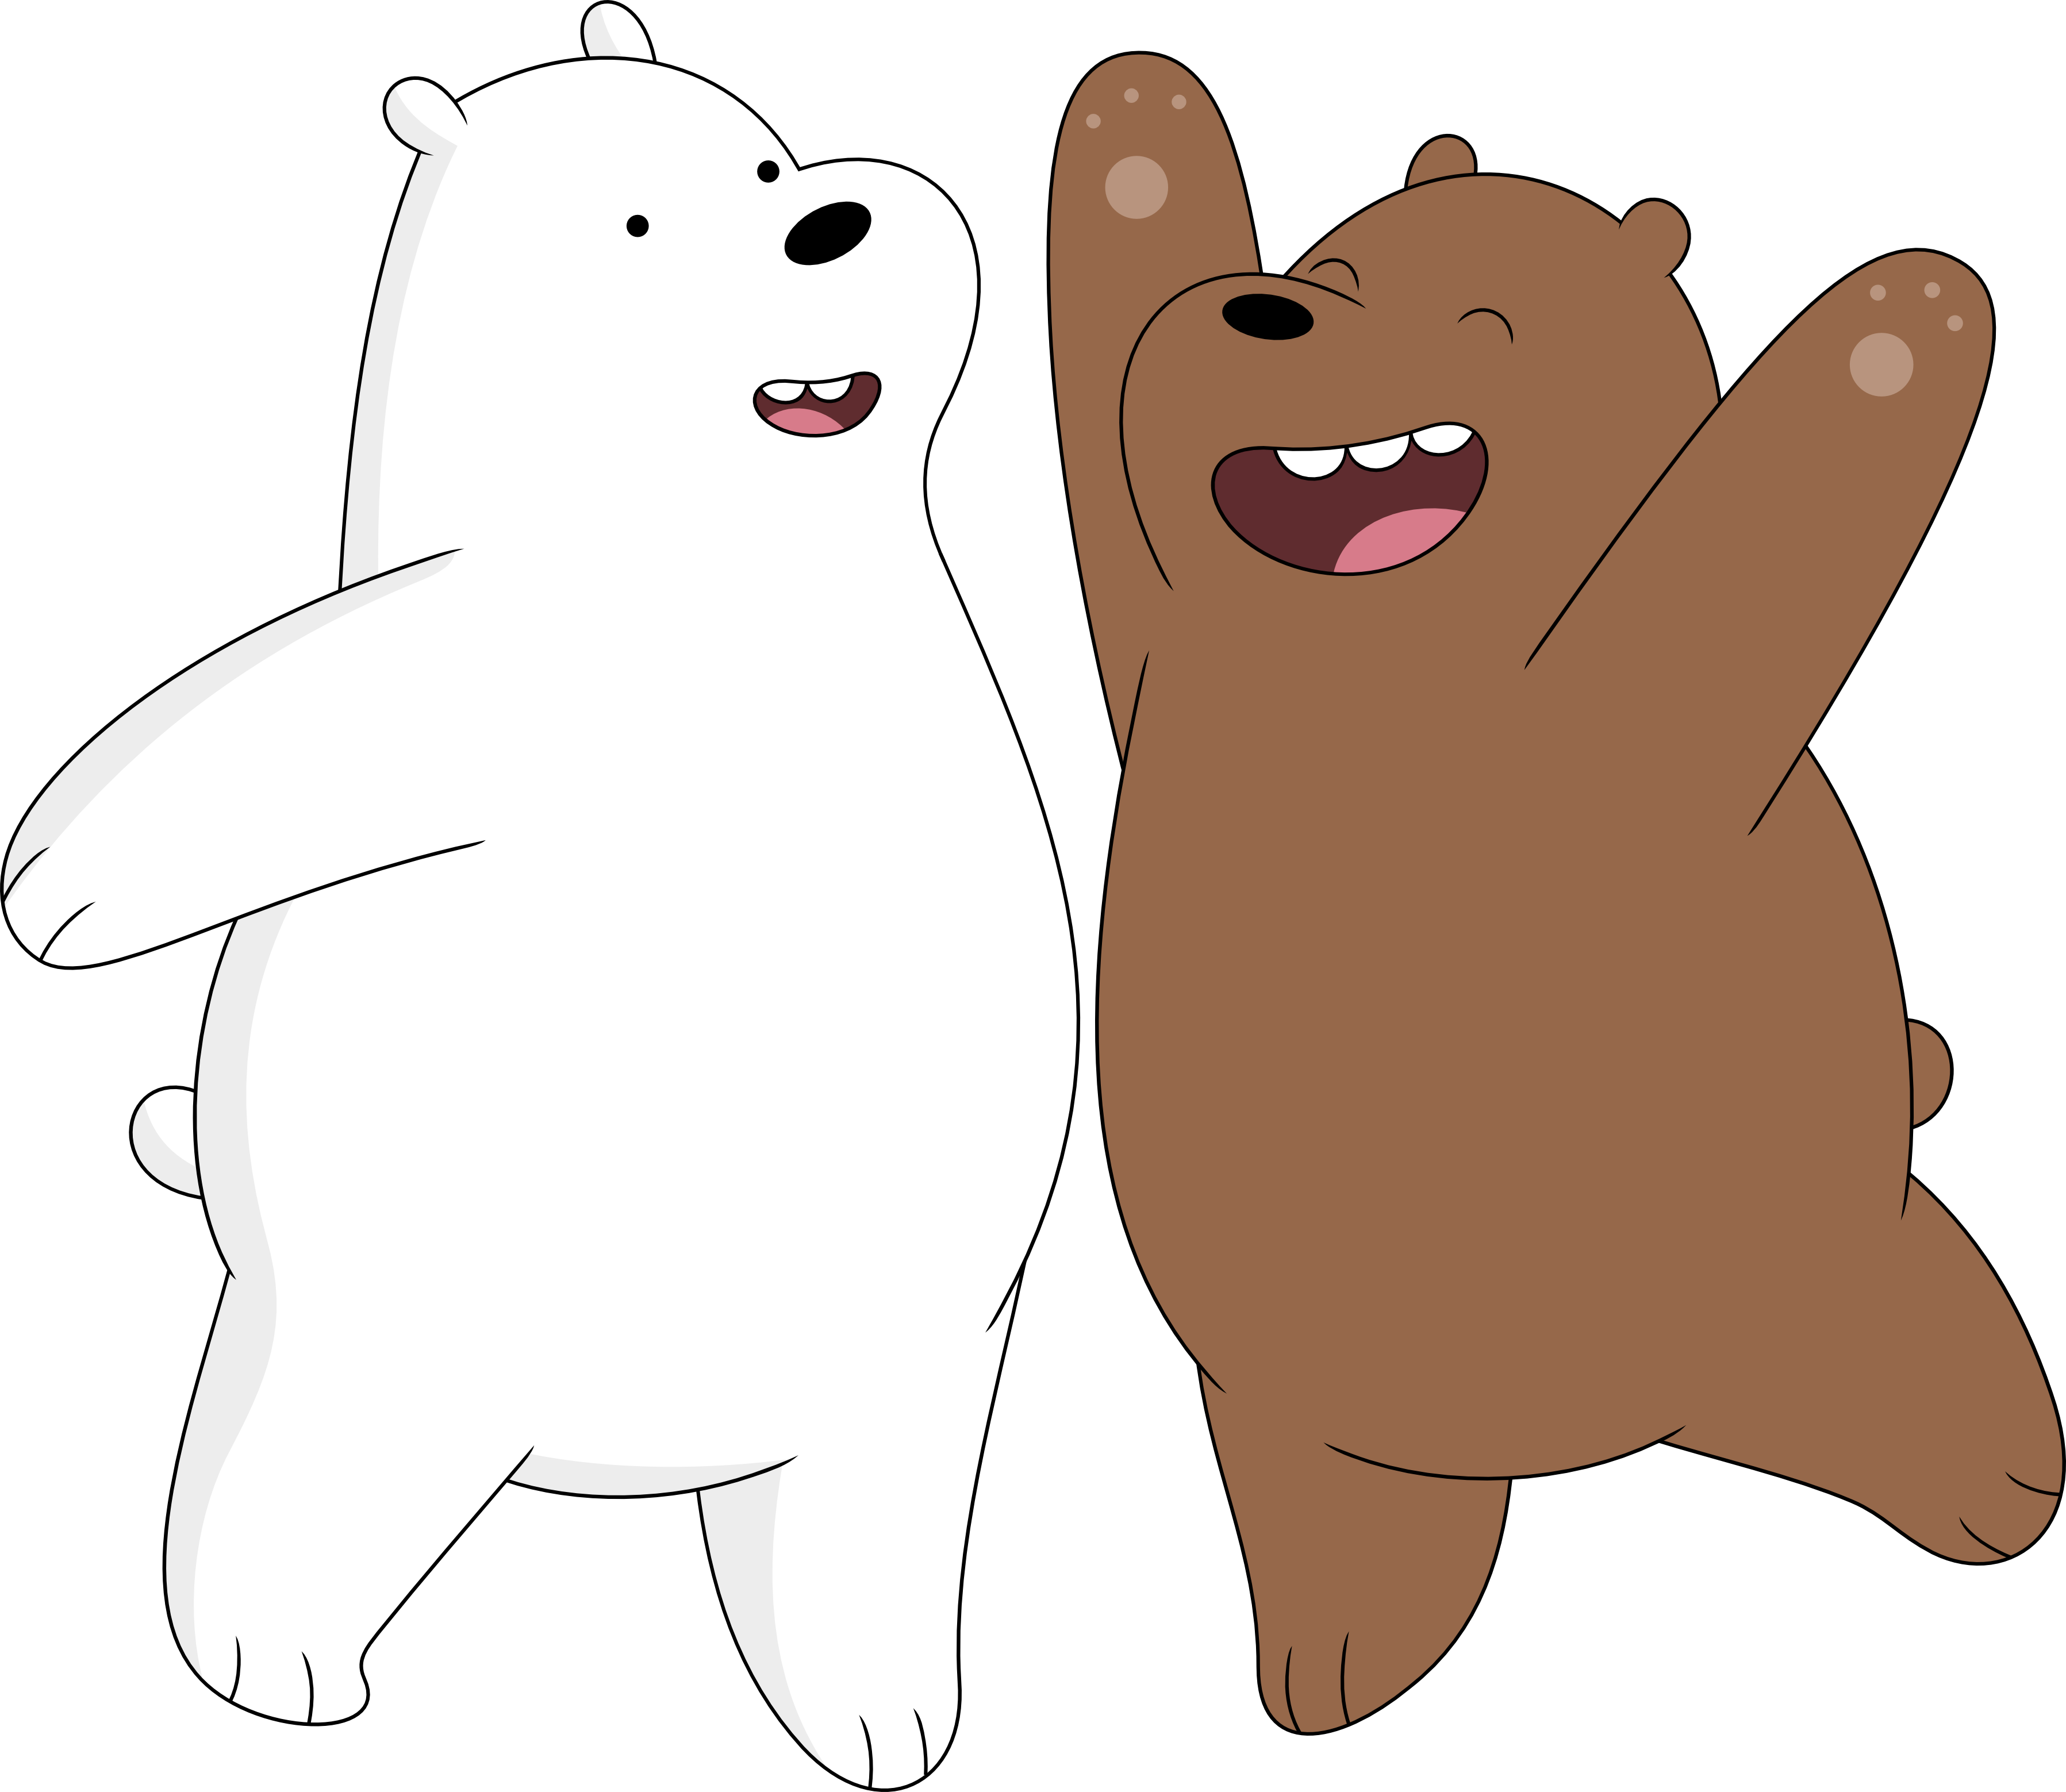 Bears 2 shop. We bare Bears Гризли. Вся правда о медведях белый с бурым. We bare Bears белый.